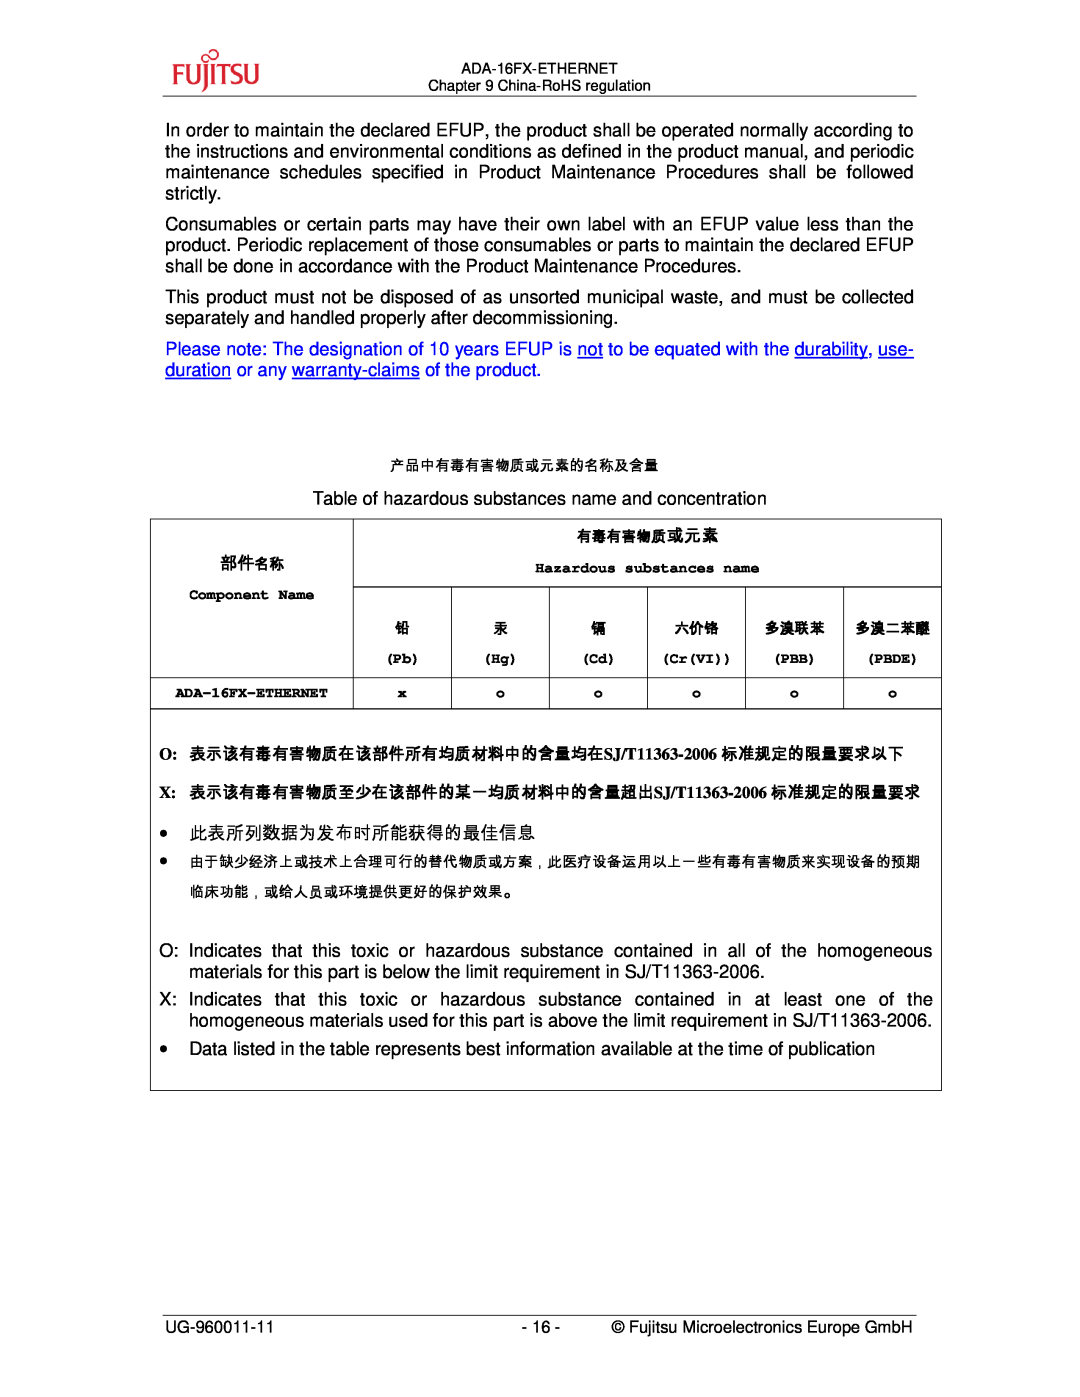 Fujitsu ADA-16FX manual ∙ 此表所列数据为发布时所能获得的最佳信息 